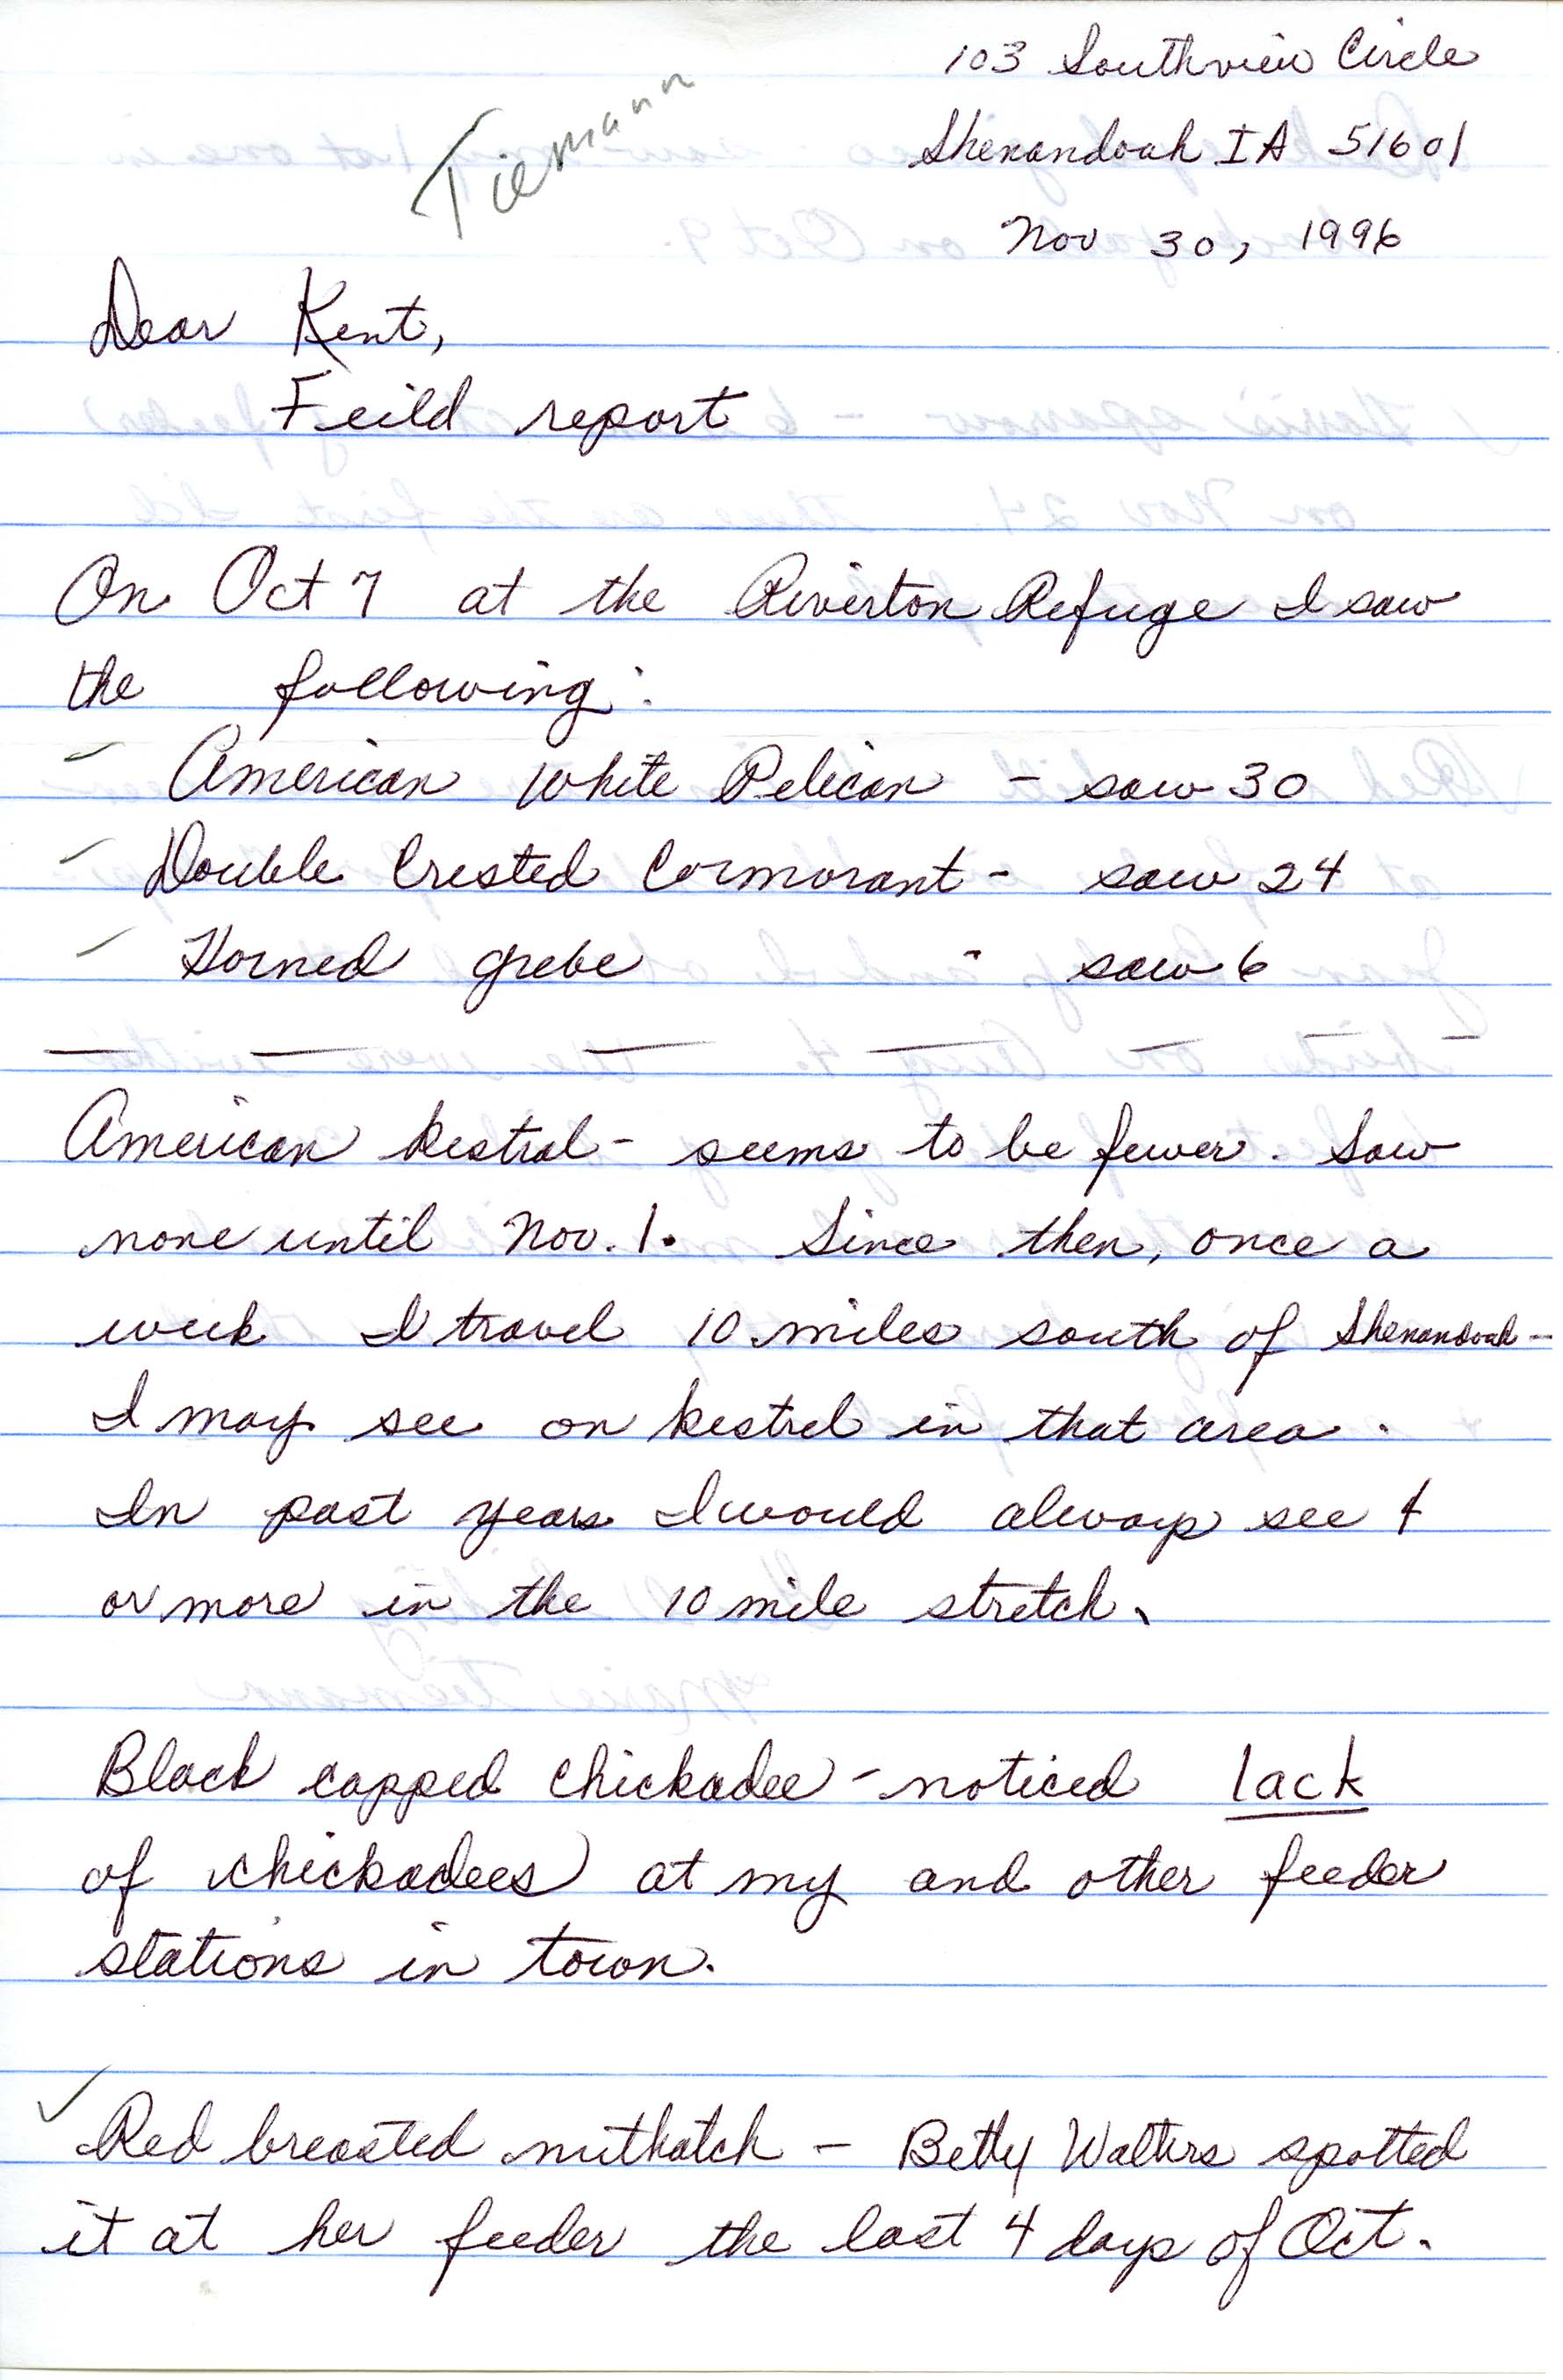 Marie E. Spears Tiemann letter to Thomas H. Kent regarding bird sightings, November 30, 1996